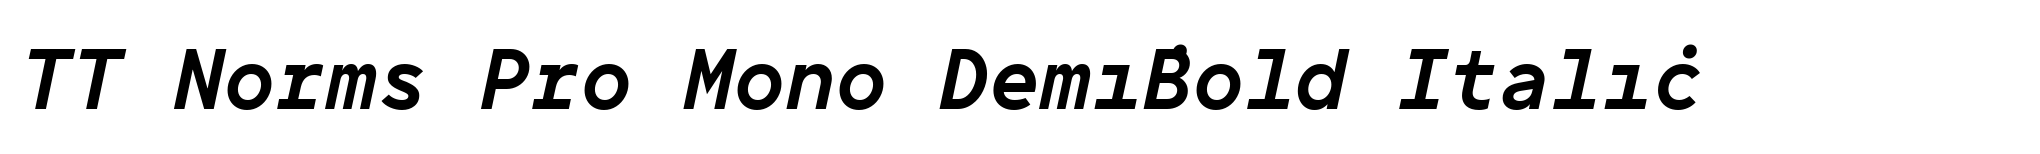 TT Norms Pro Mono DemiBold Italic image